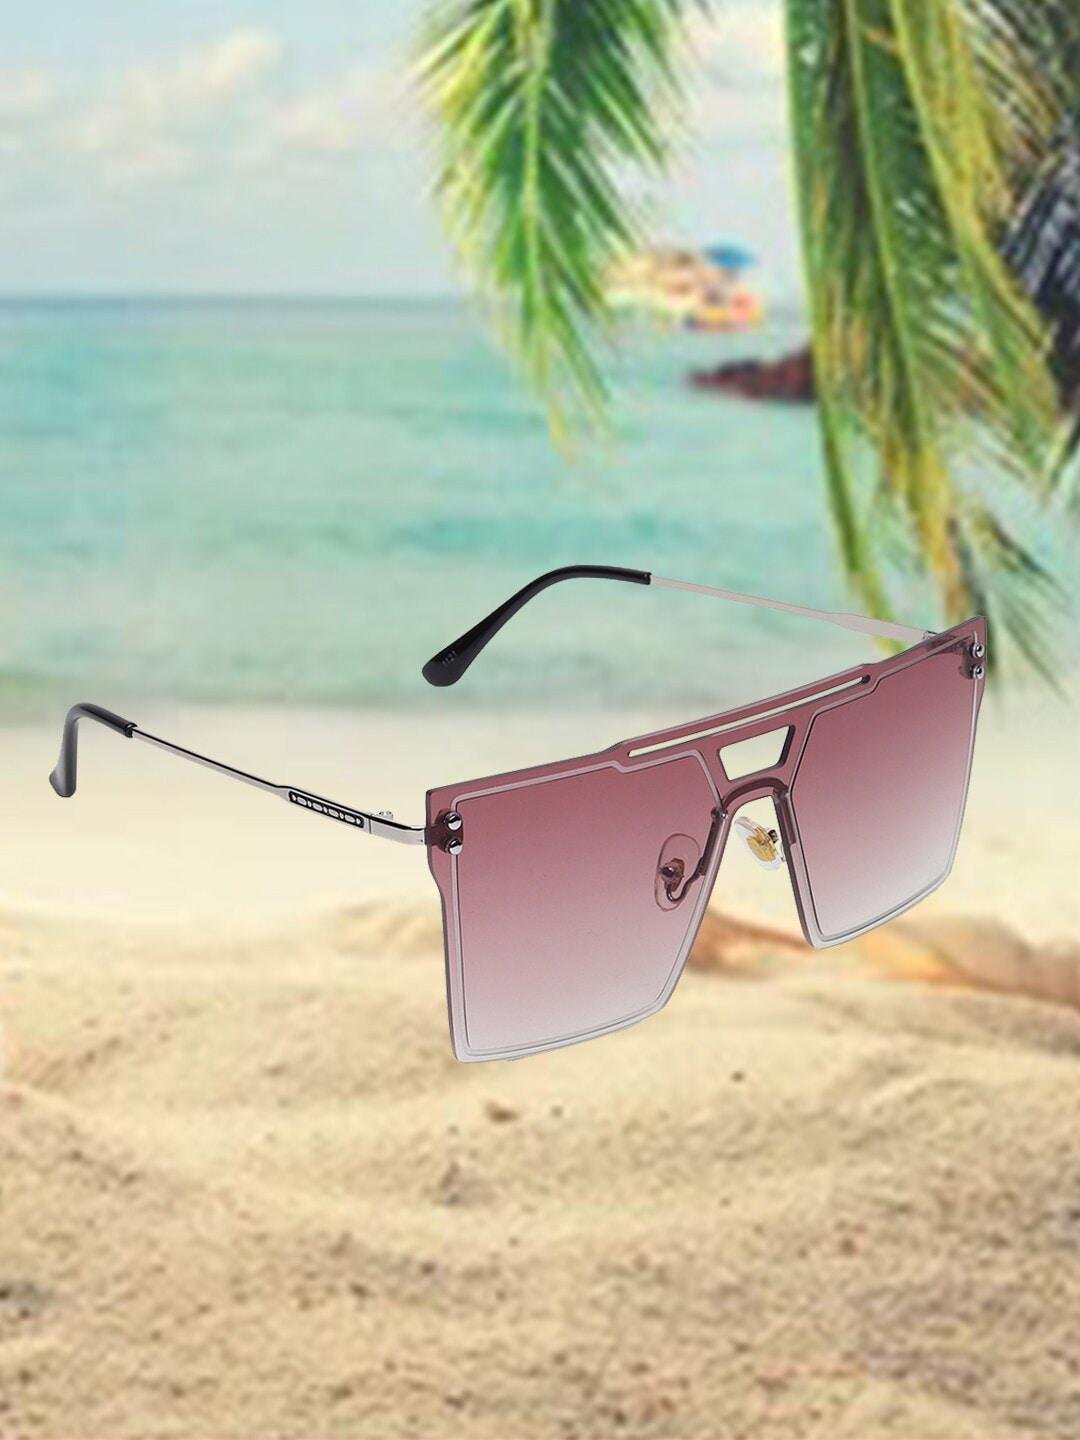 celebrity sunglasses wayfarer sunglasses with uv protected lens clsg-1120-03